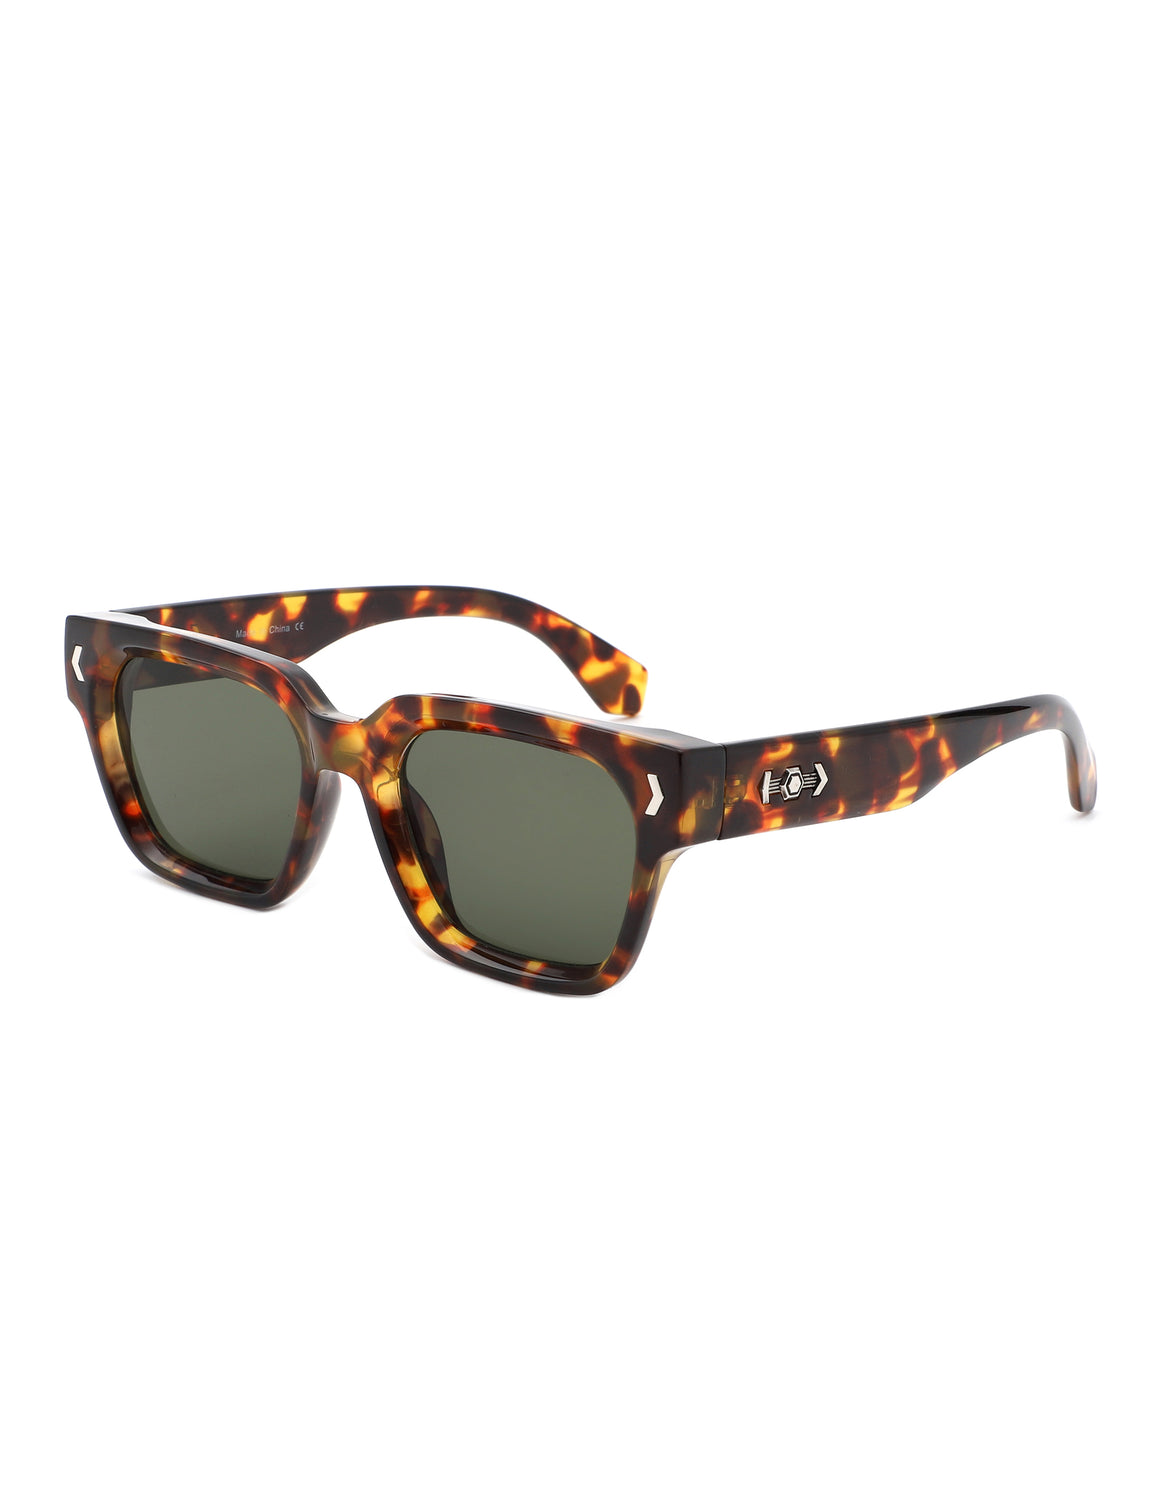 Cramilo  Retro Thick Sunglasses - Square Frame Women's Fashion Sun Glasses - UVA & UVB Protection Polycarbonate Lens Eyewear